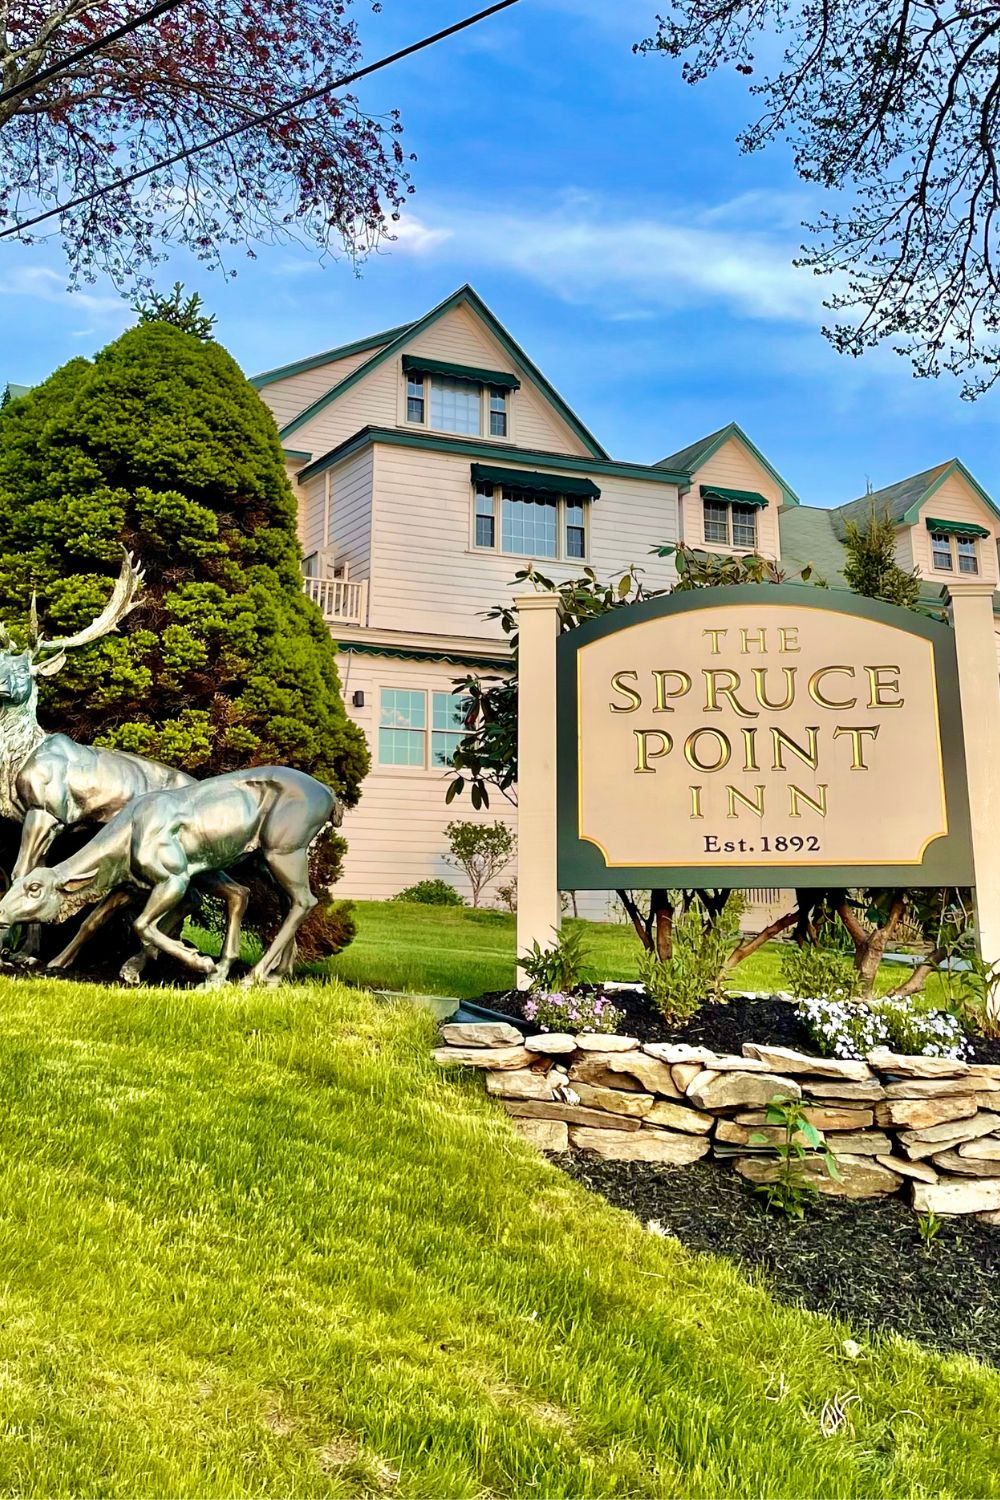 Spruce Point inn Resort & Spa in Boothbay Harbor, Maine